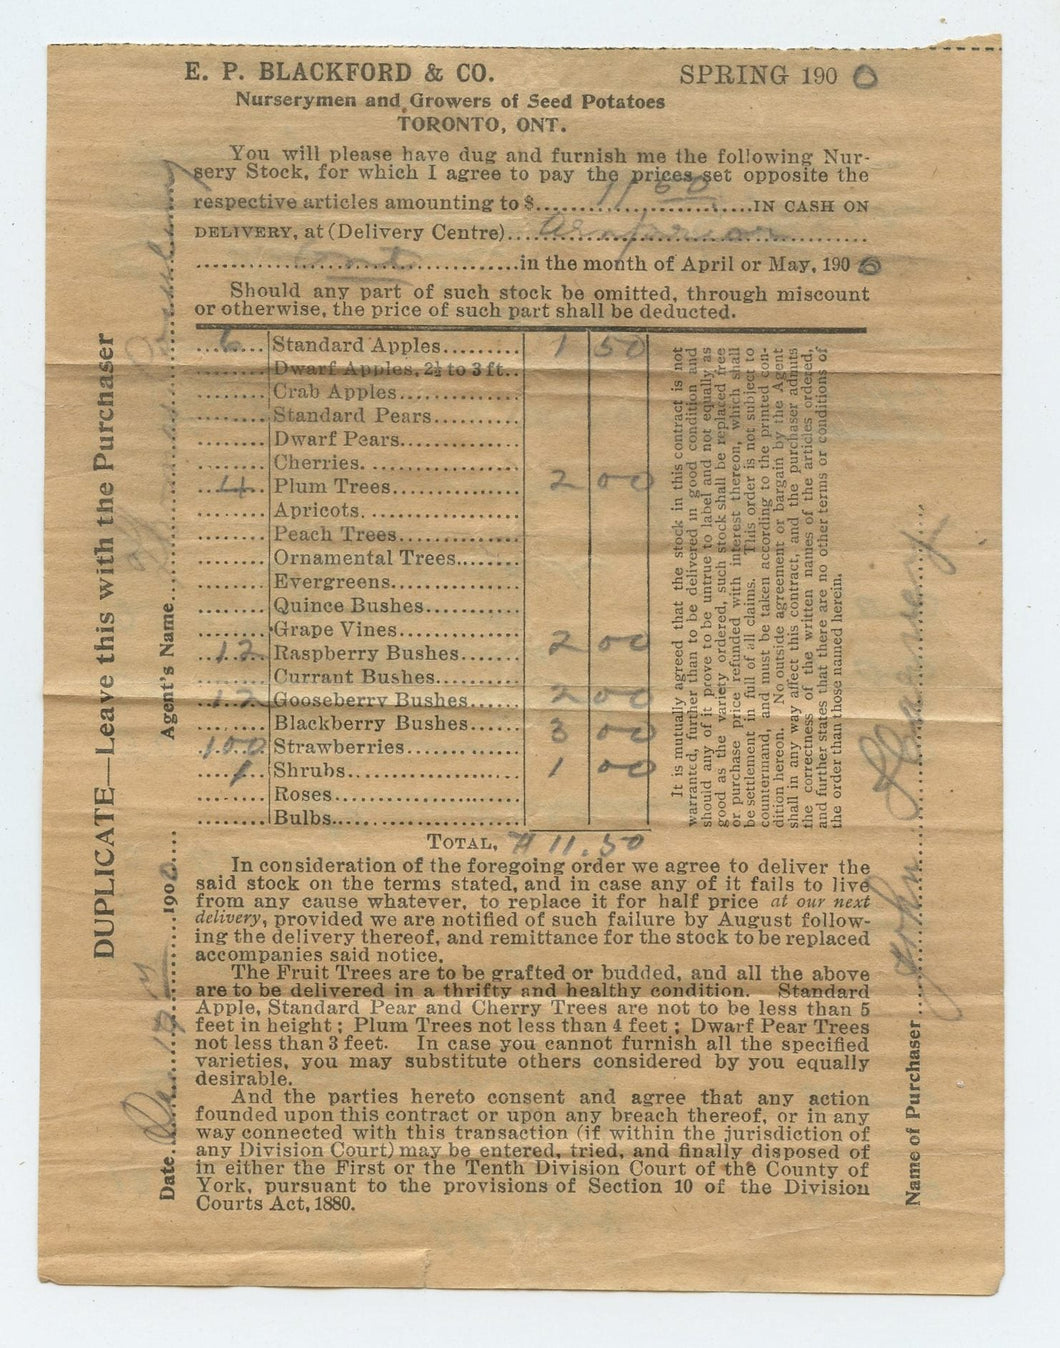 E. P. Blackford & Co. Nurserymen order form 